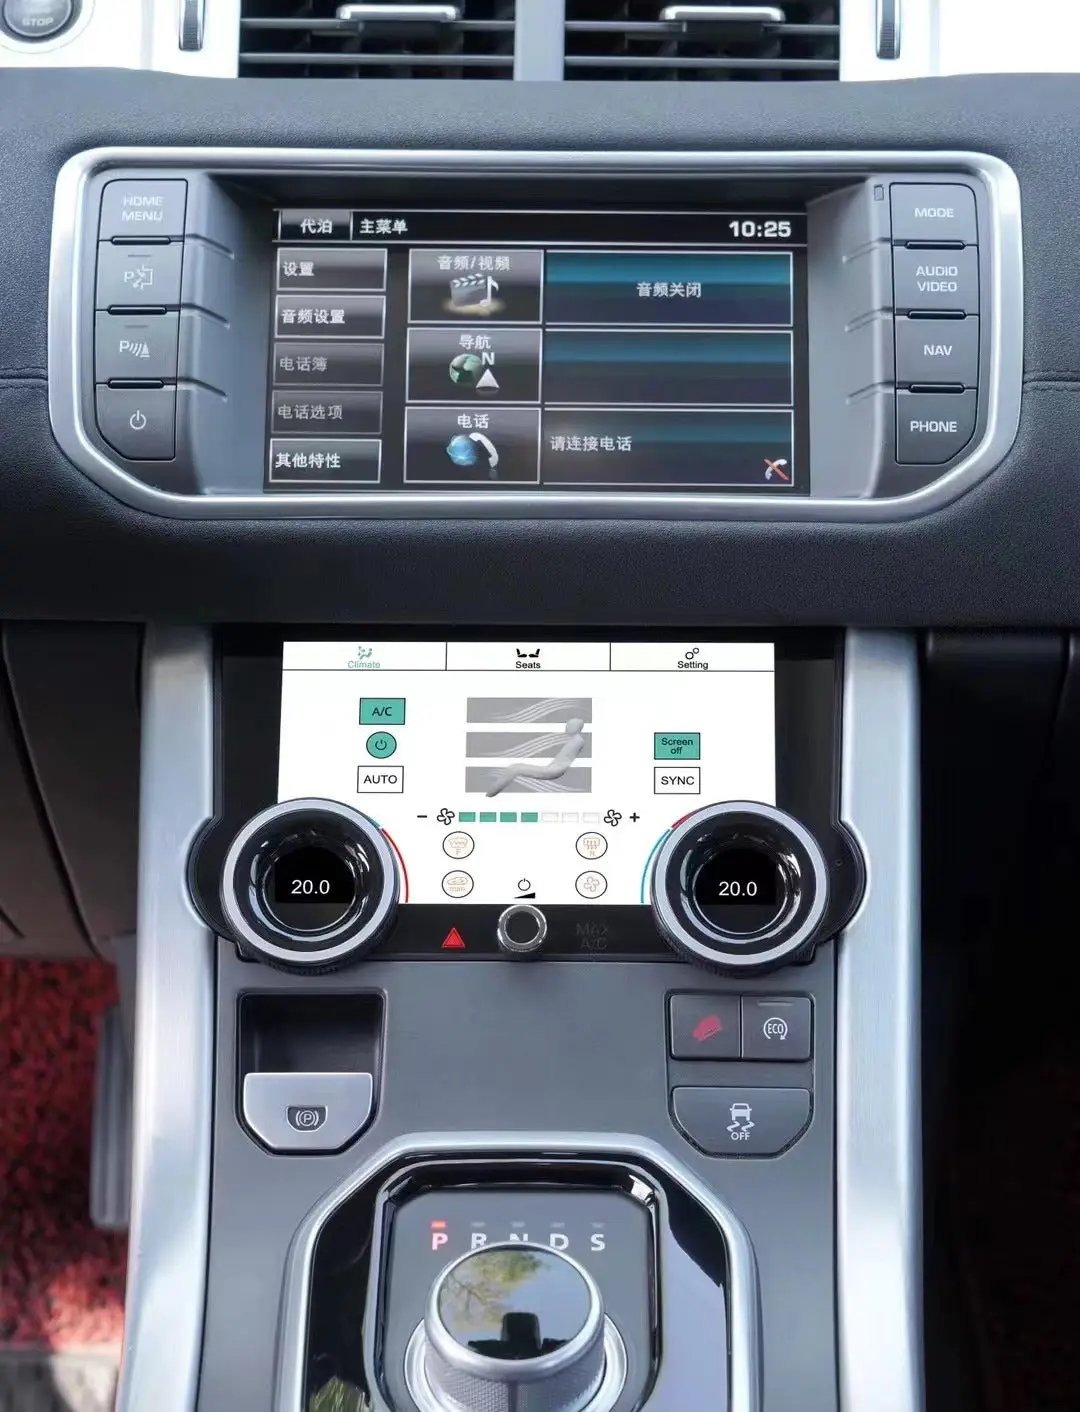 Evoque Digital Climate Control for (2011-2017) Range Rover Evoque